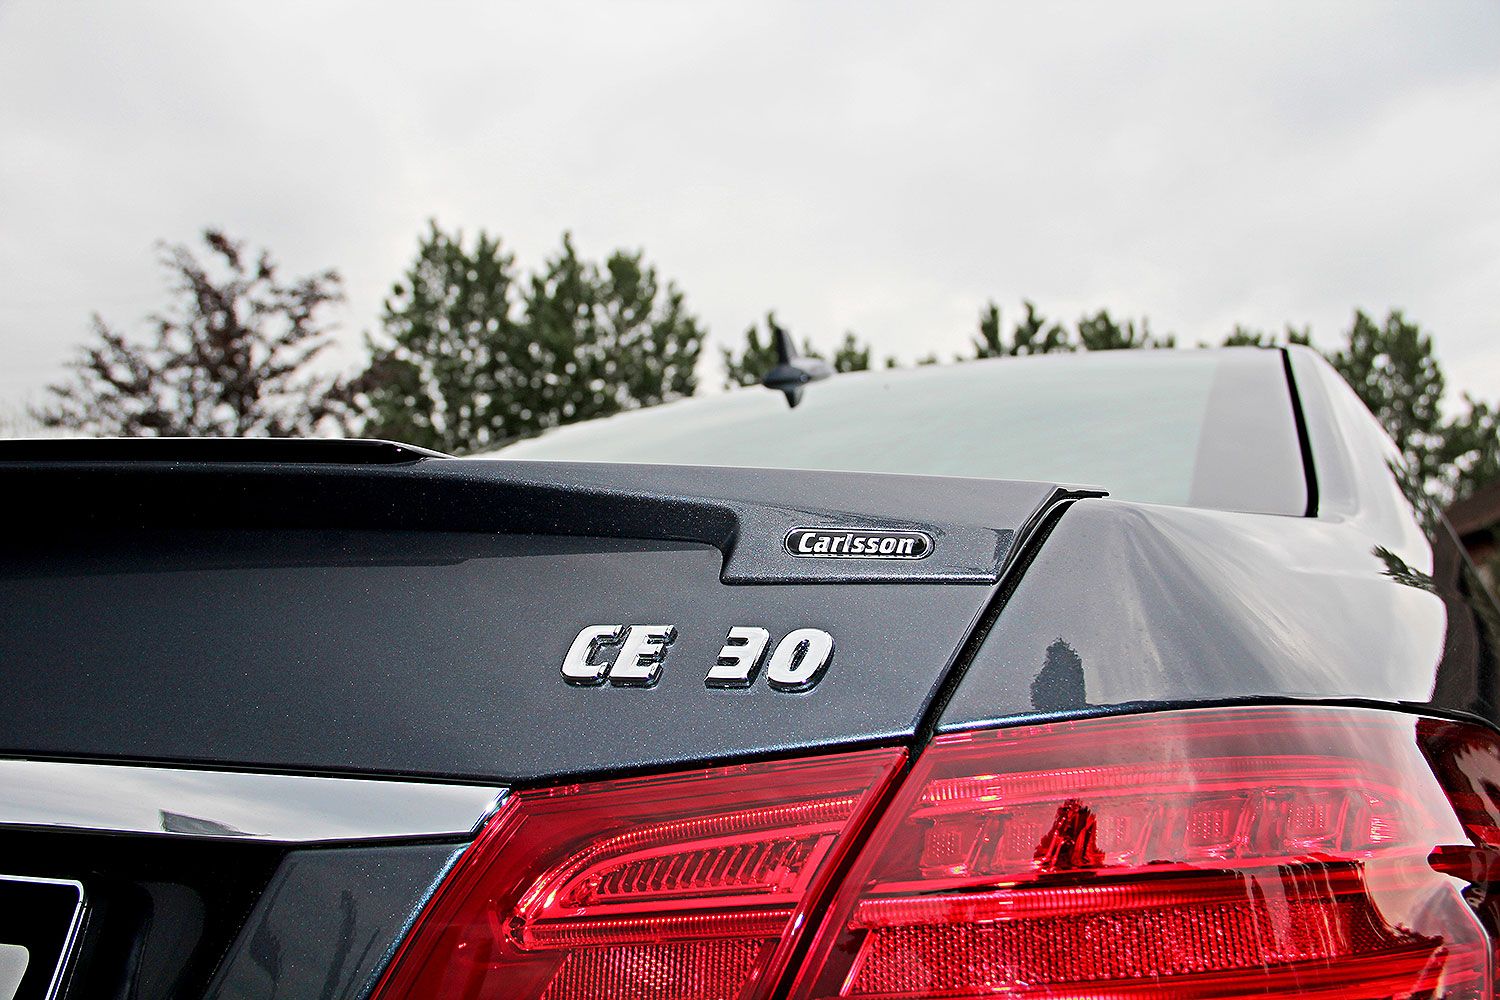 2014 Mercedes E-Class CE30 By Carlsson